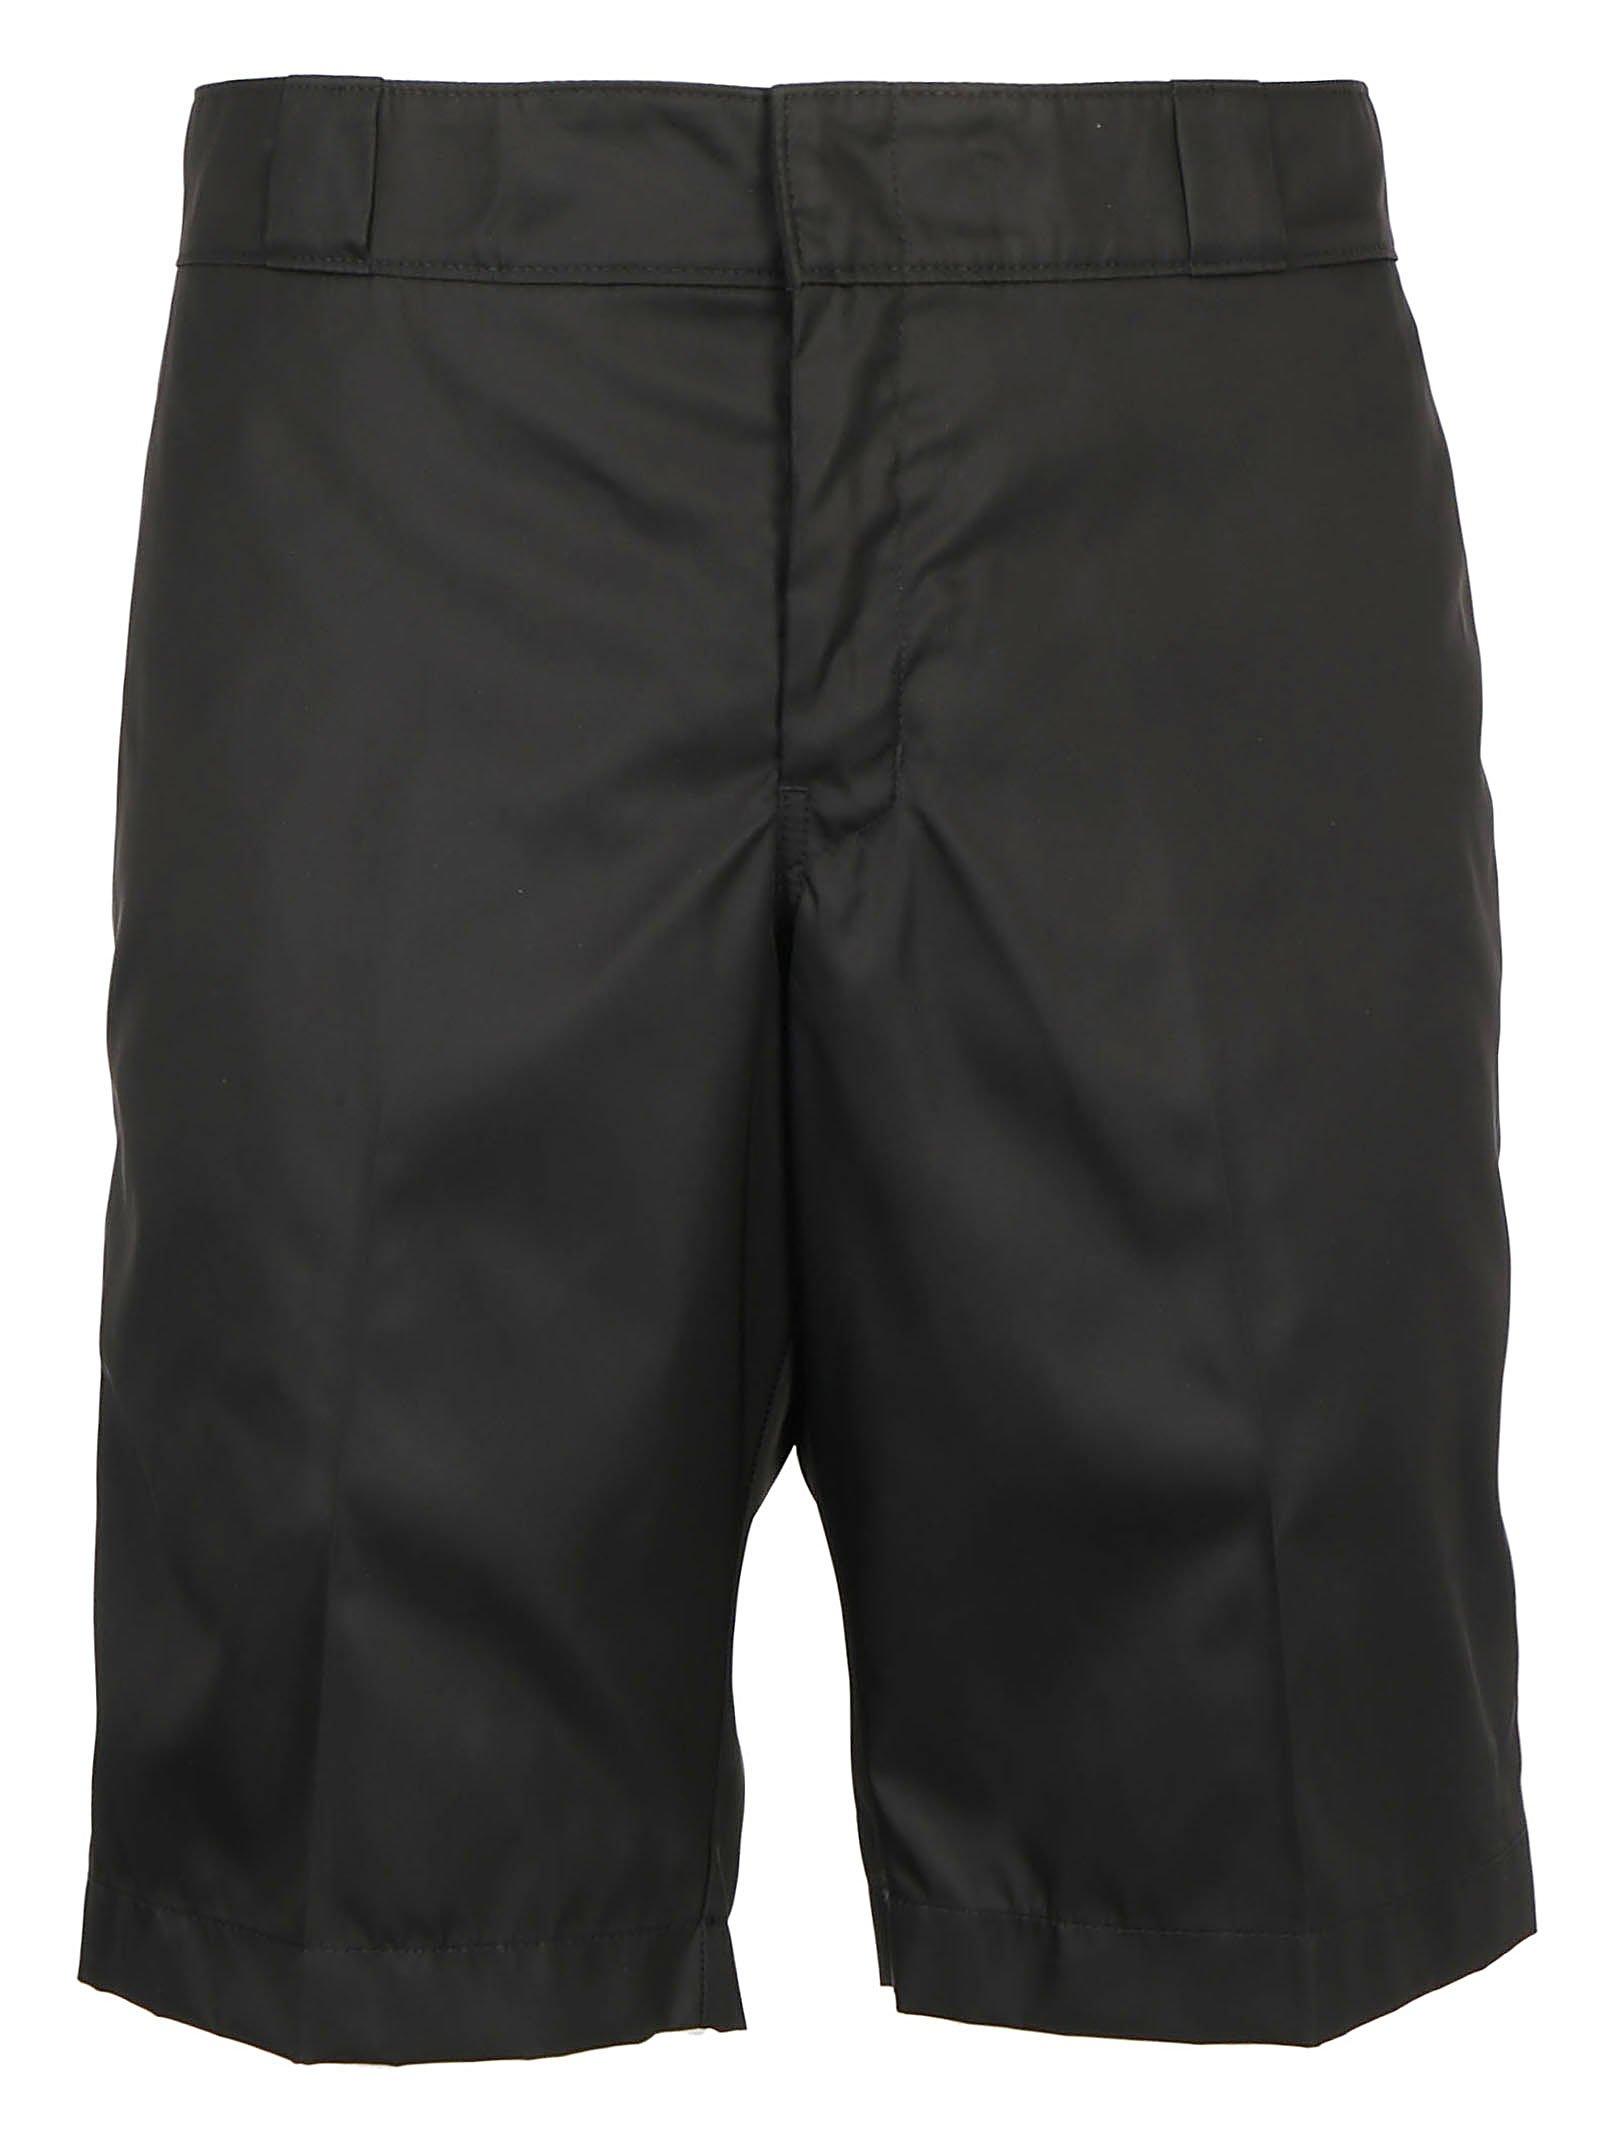 Prada Synthetic Tailored Bermuda Shorts in Black for Men - Lyst